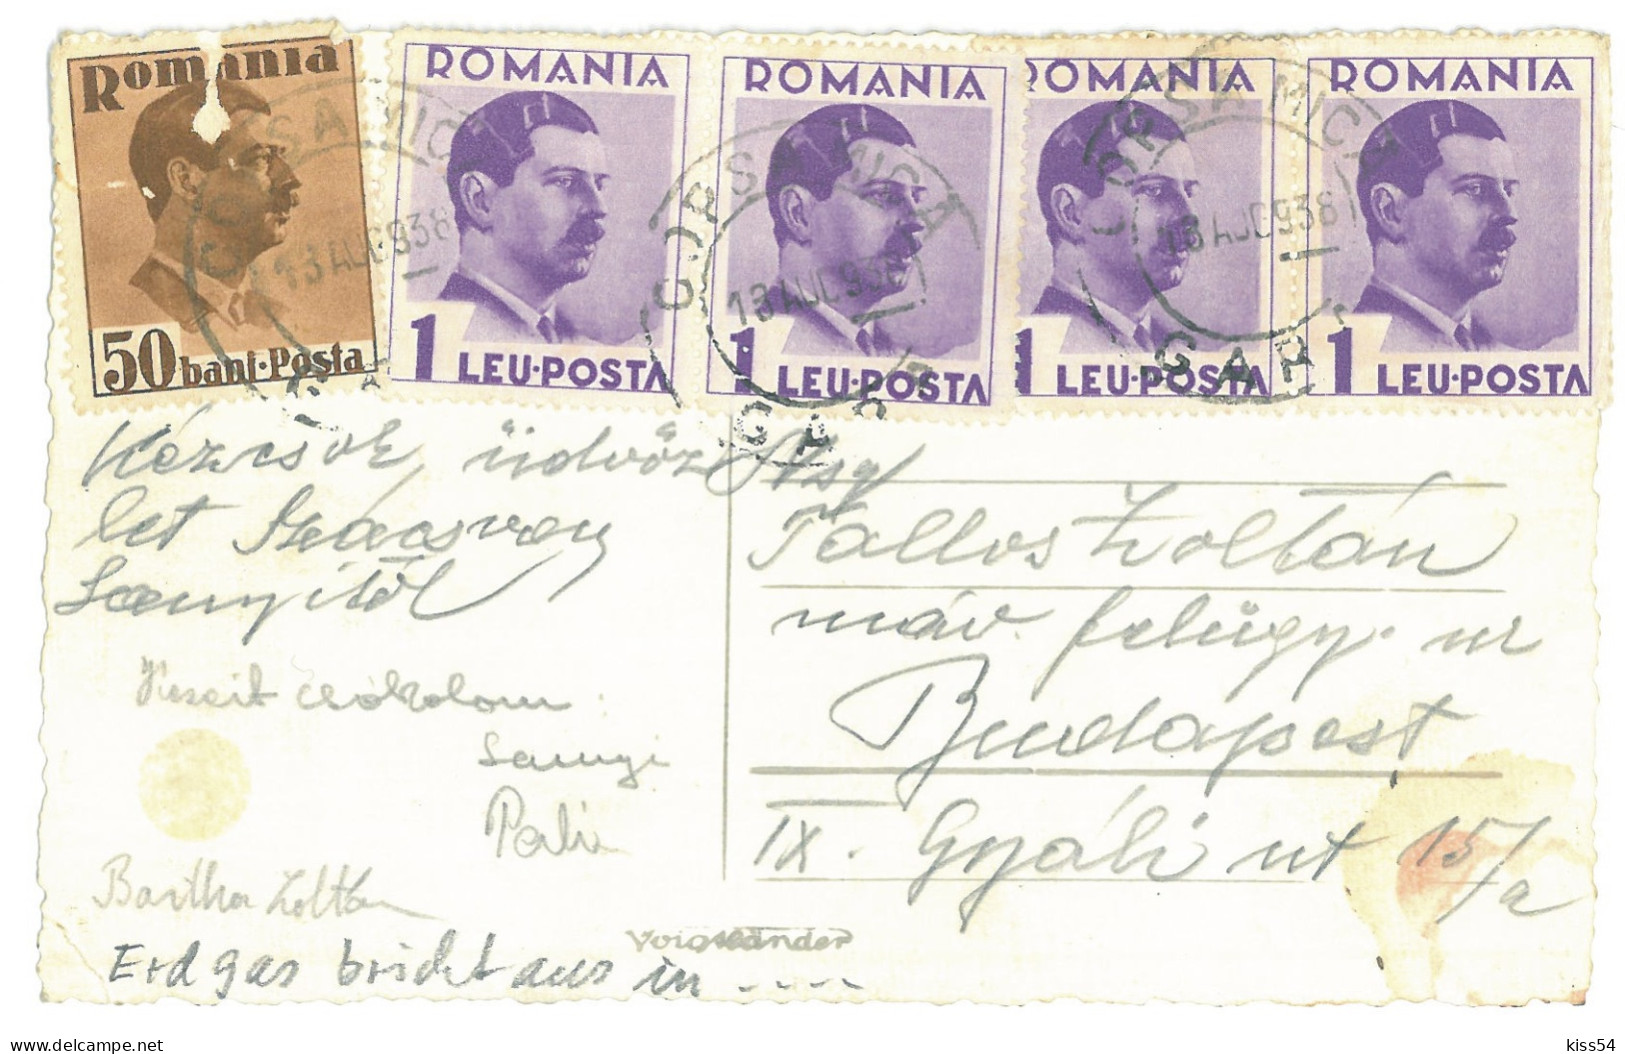 RO 81 - 25032 COPSA-MICA, Sibiu, Arderea Gazului Metan, Romania - Old Postcard, Real Photo - Used - 1938 - Romania